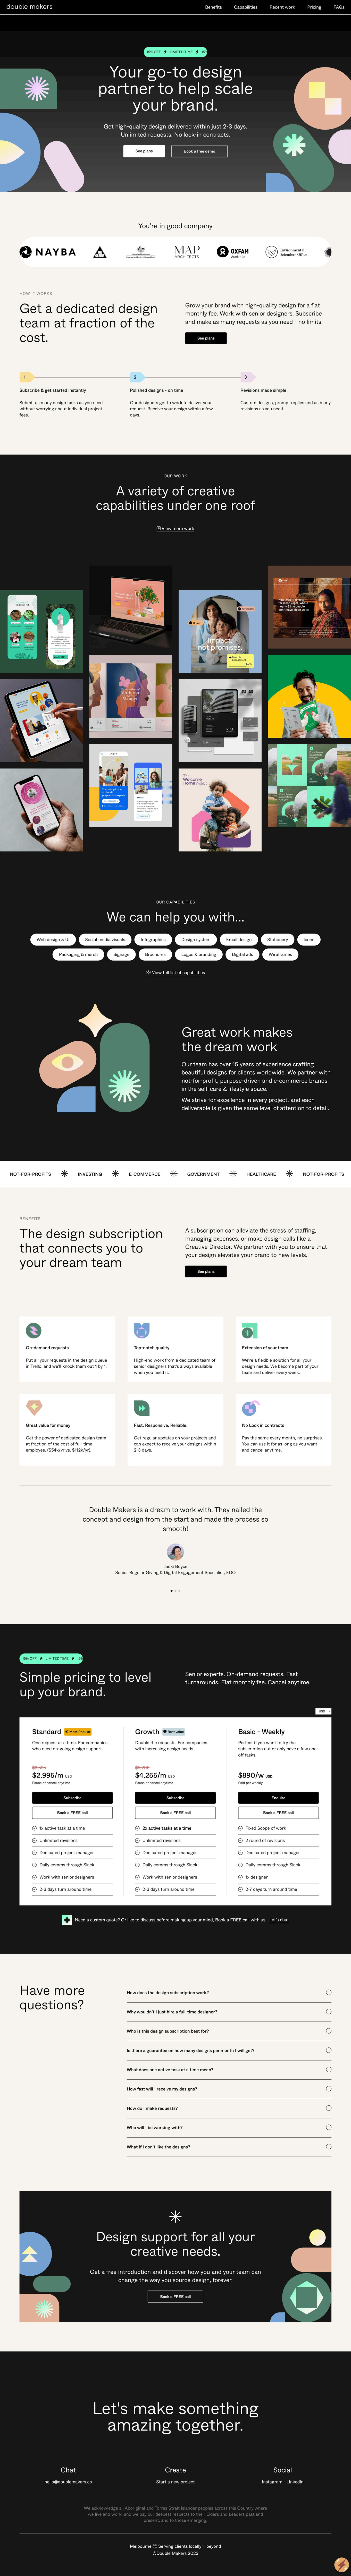 Double Makers Design Subscription Website Screenshot